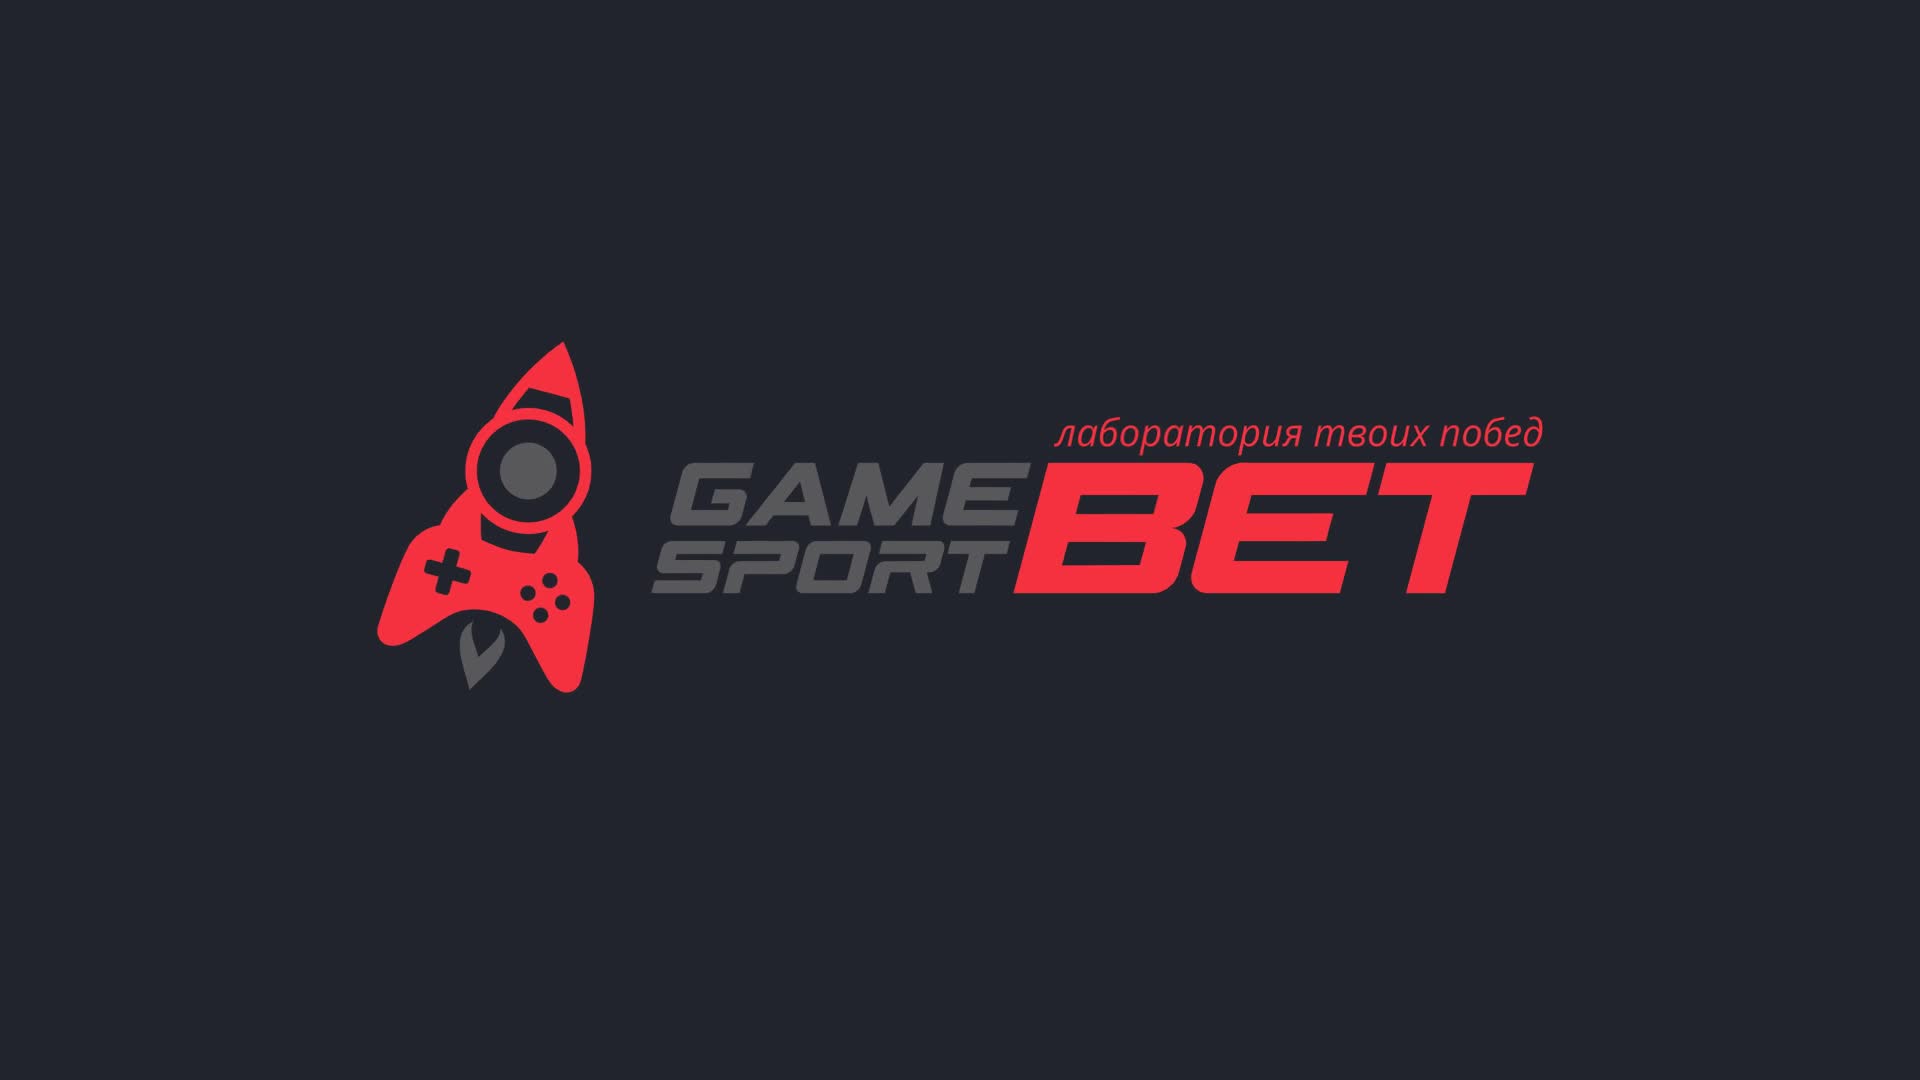 Геймспорт сайт. Gamesport логотип. Game Sport ,Бэт. Горячая линия гейм спорт.